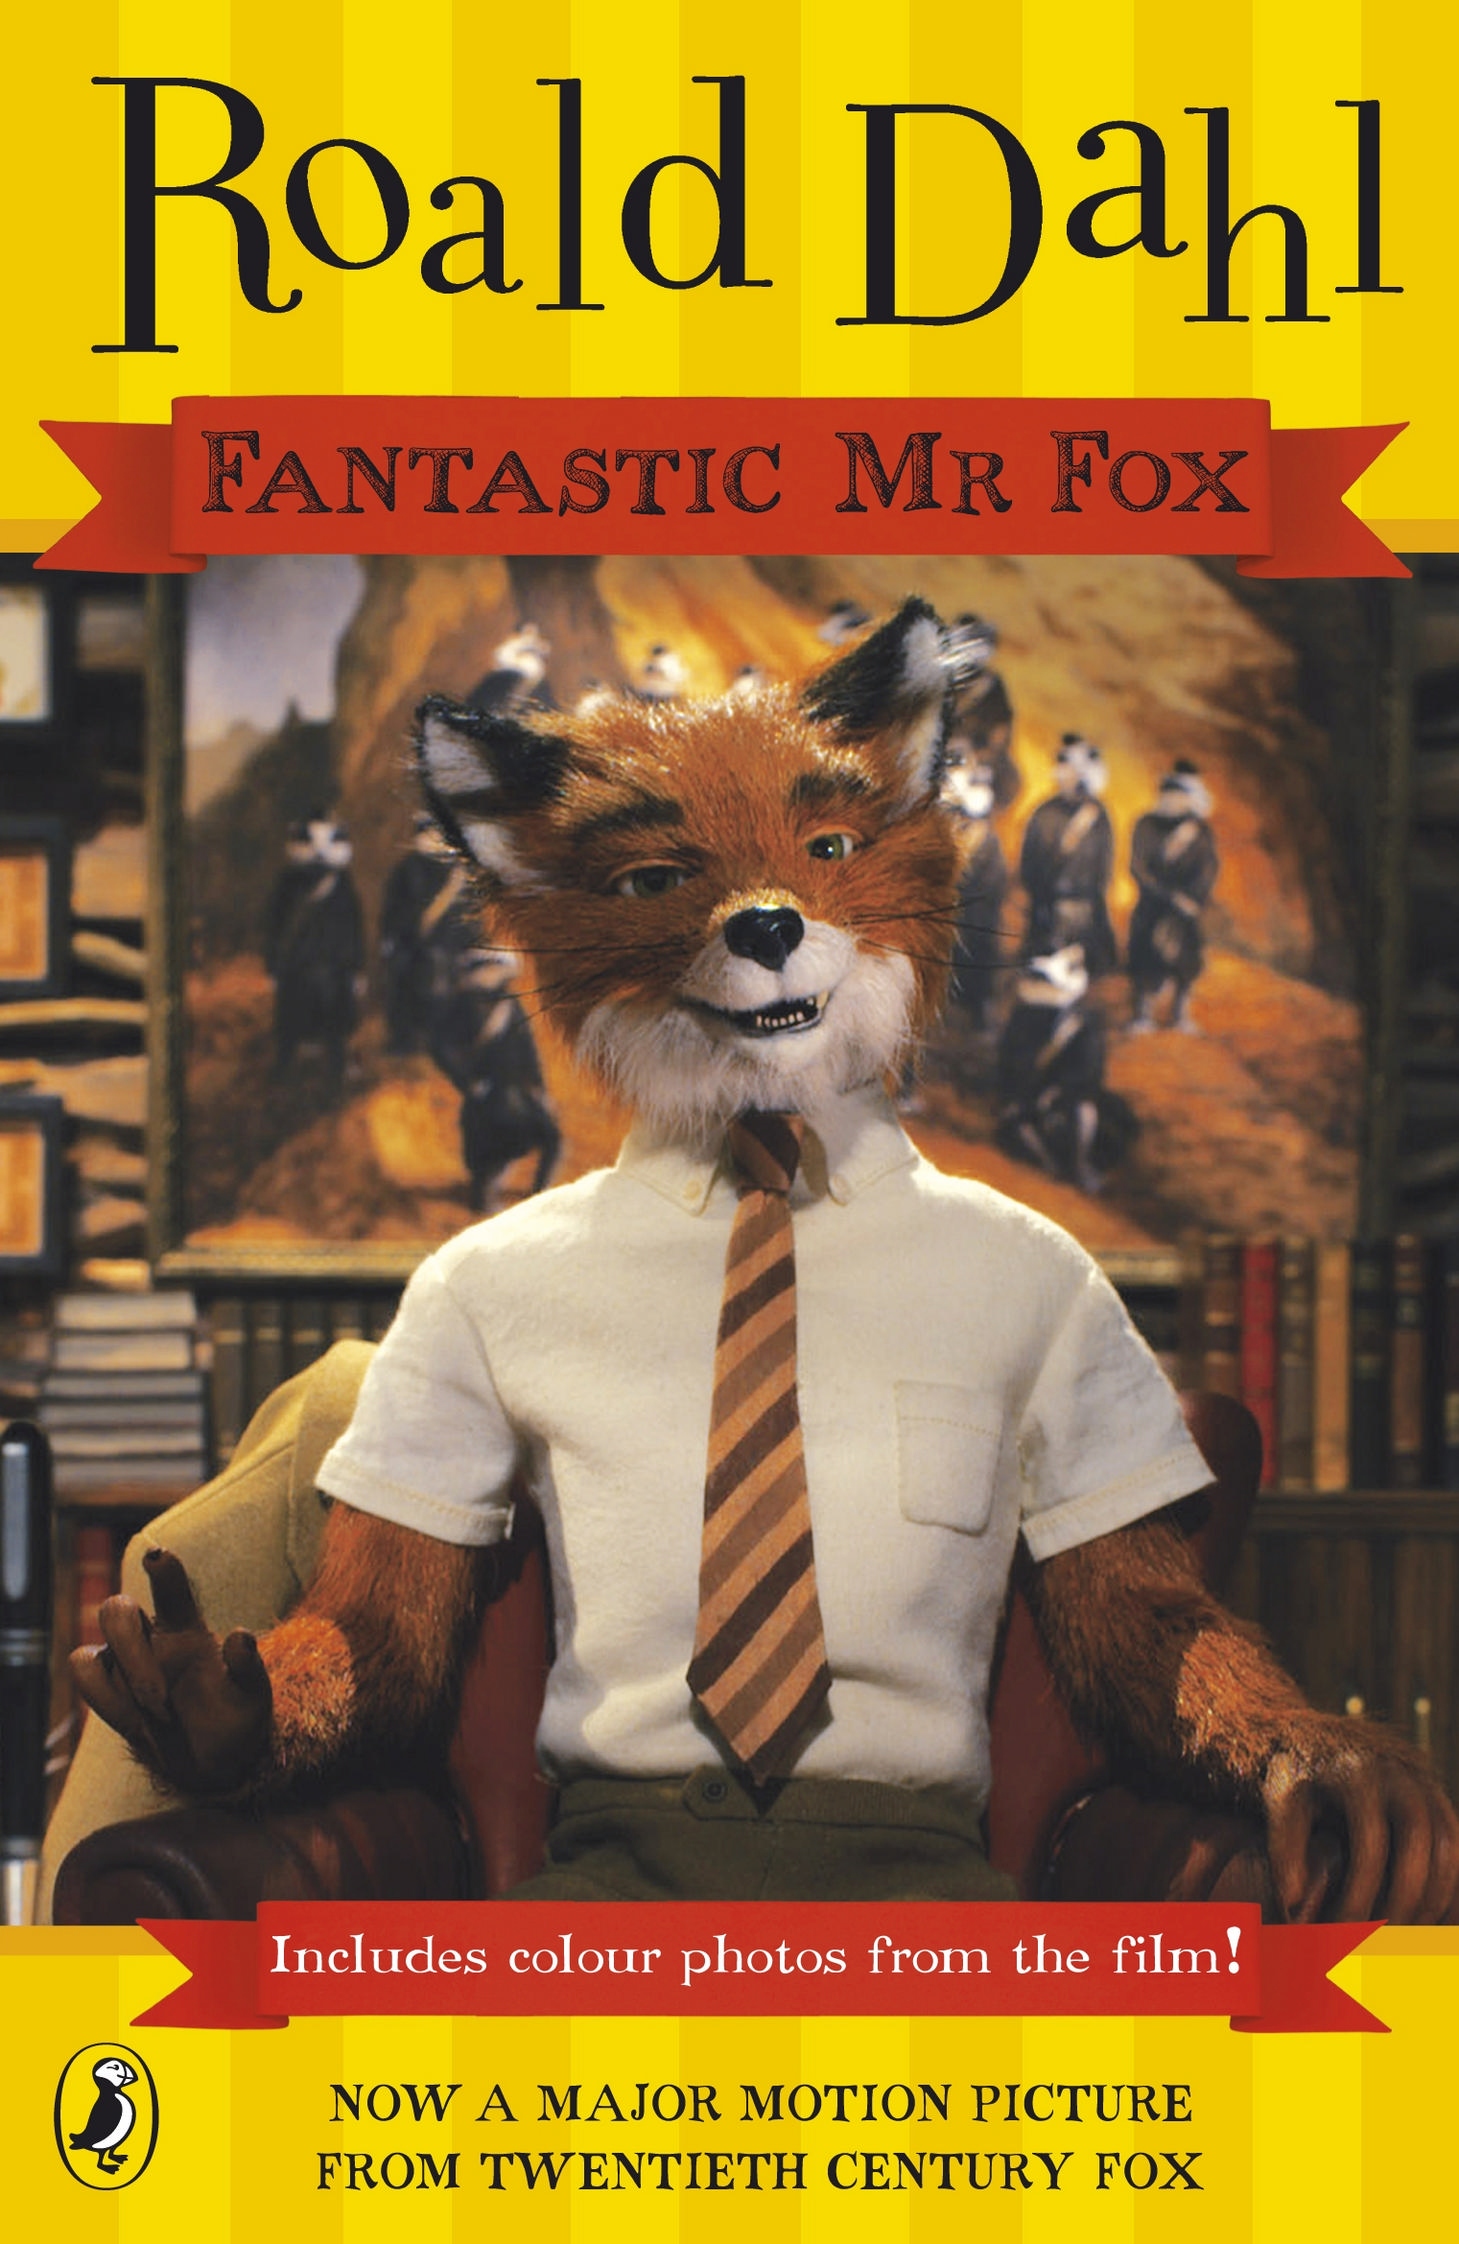 Fox books. Fantastic Mr Fox книга. Роальд даль Мистер Фокс. Бесподобный Мистер Фокс Роальд даль. Dahl Roald "fantastic Mr. Fox".